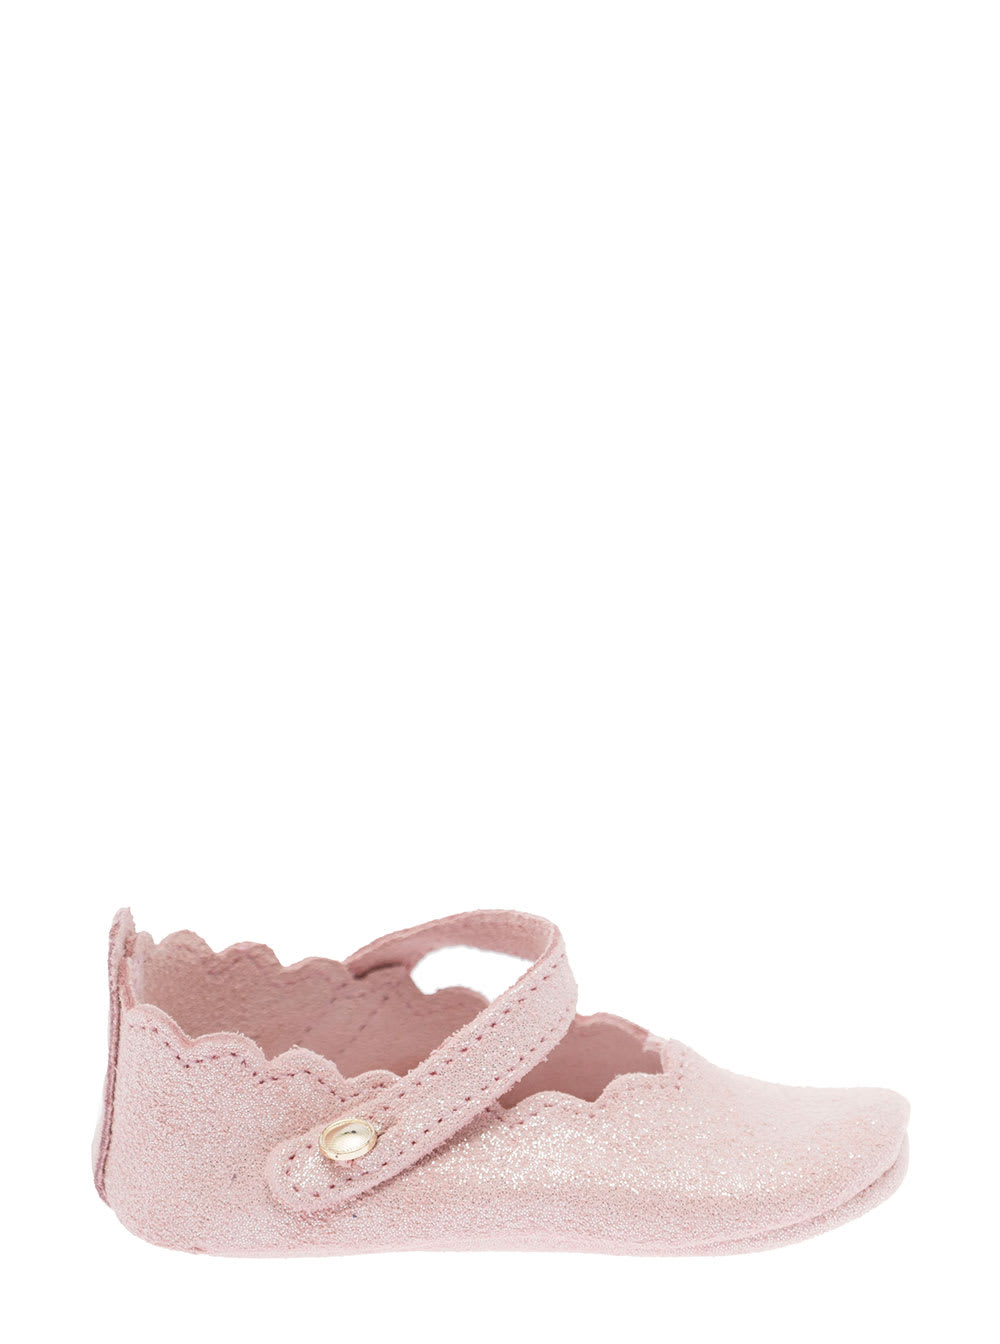 Tartine et Chocolat Tartine And Chocolat Baby Girls Pink Leather Crib Flat Shoes